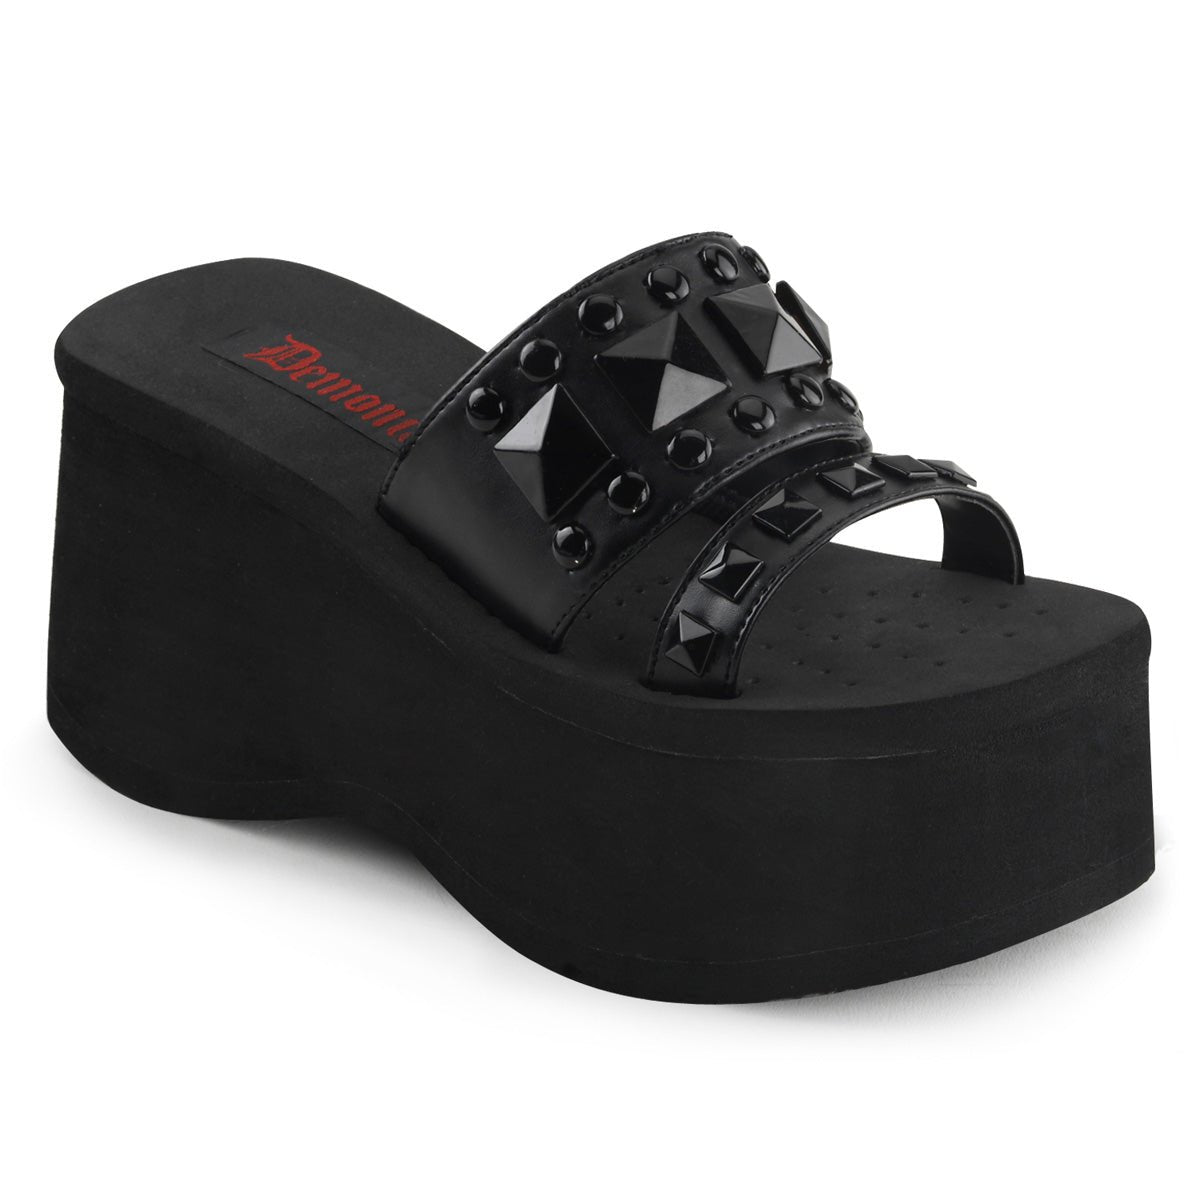 Too Fast | Demonia Funn 18 | Black Vegan Leather Women's Sandals